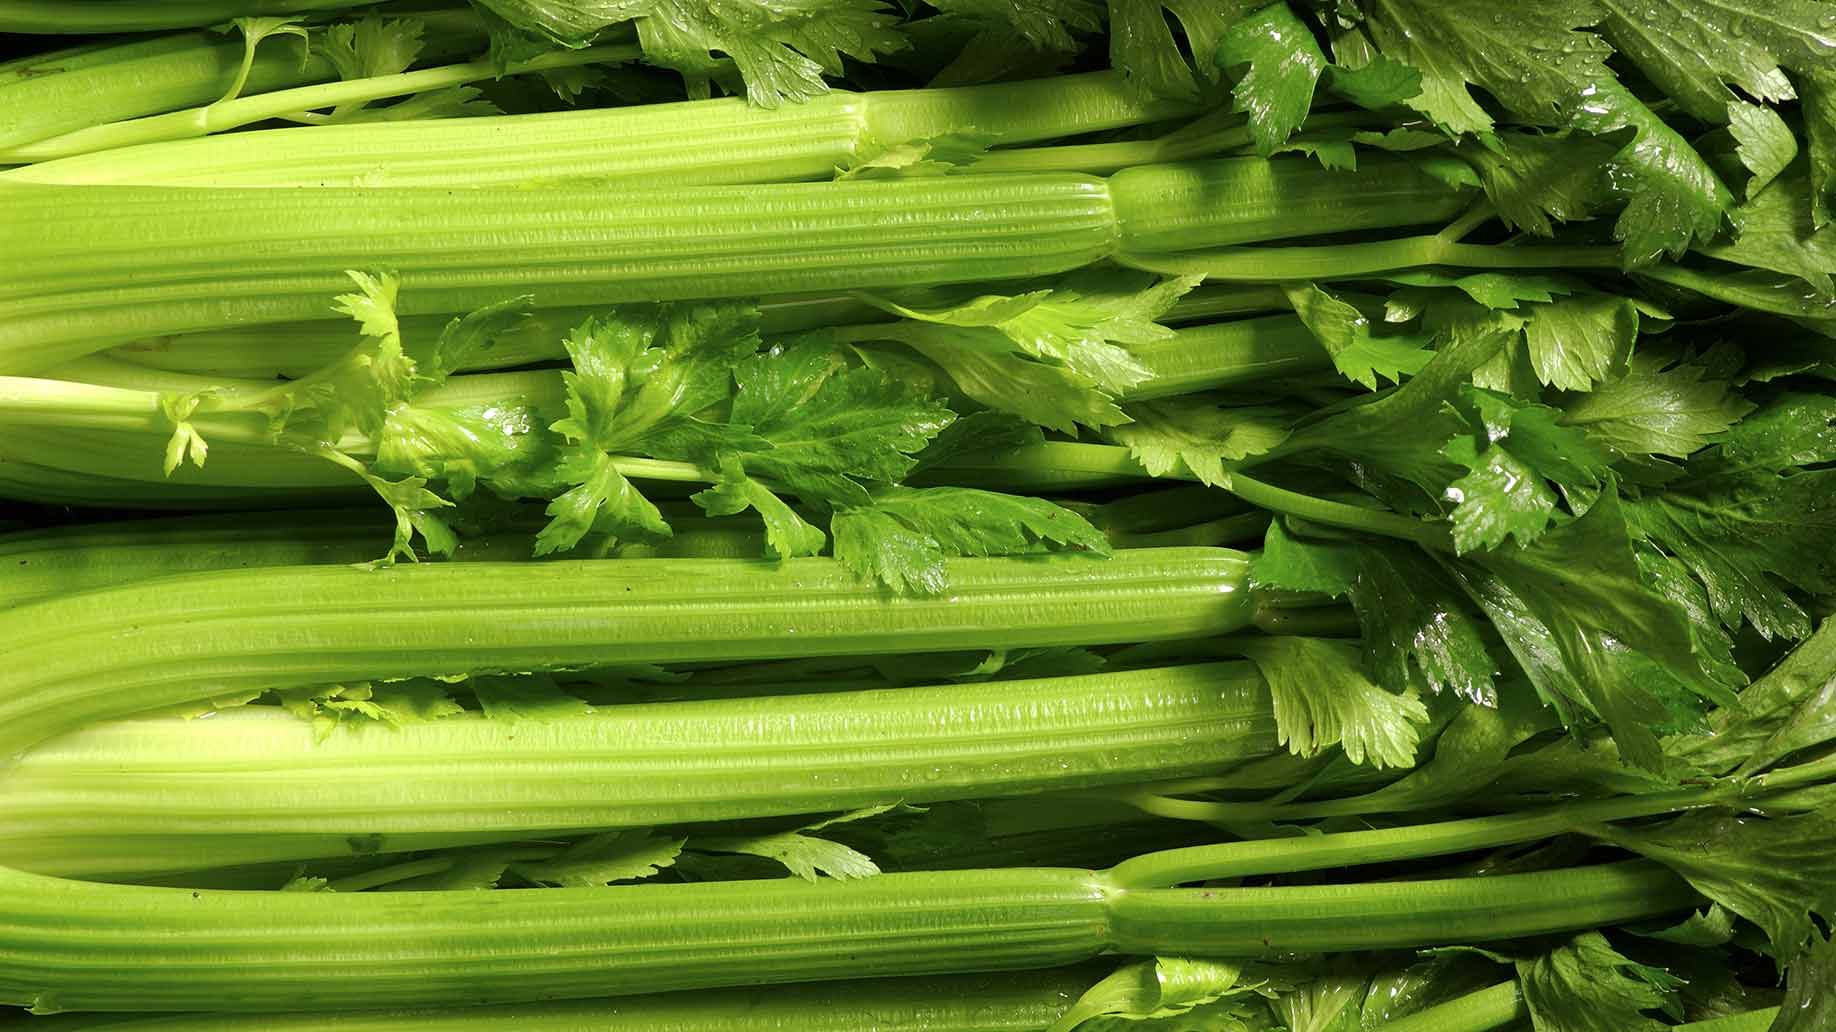 celery fresh green stalks with leaves